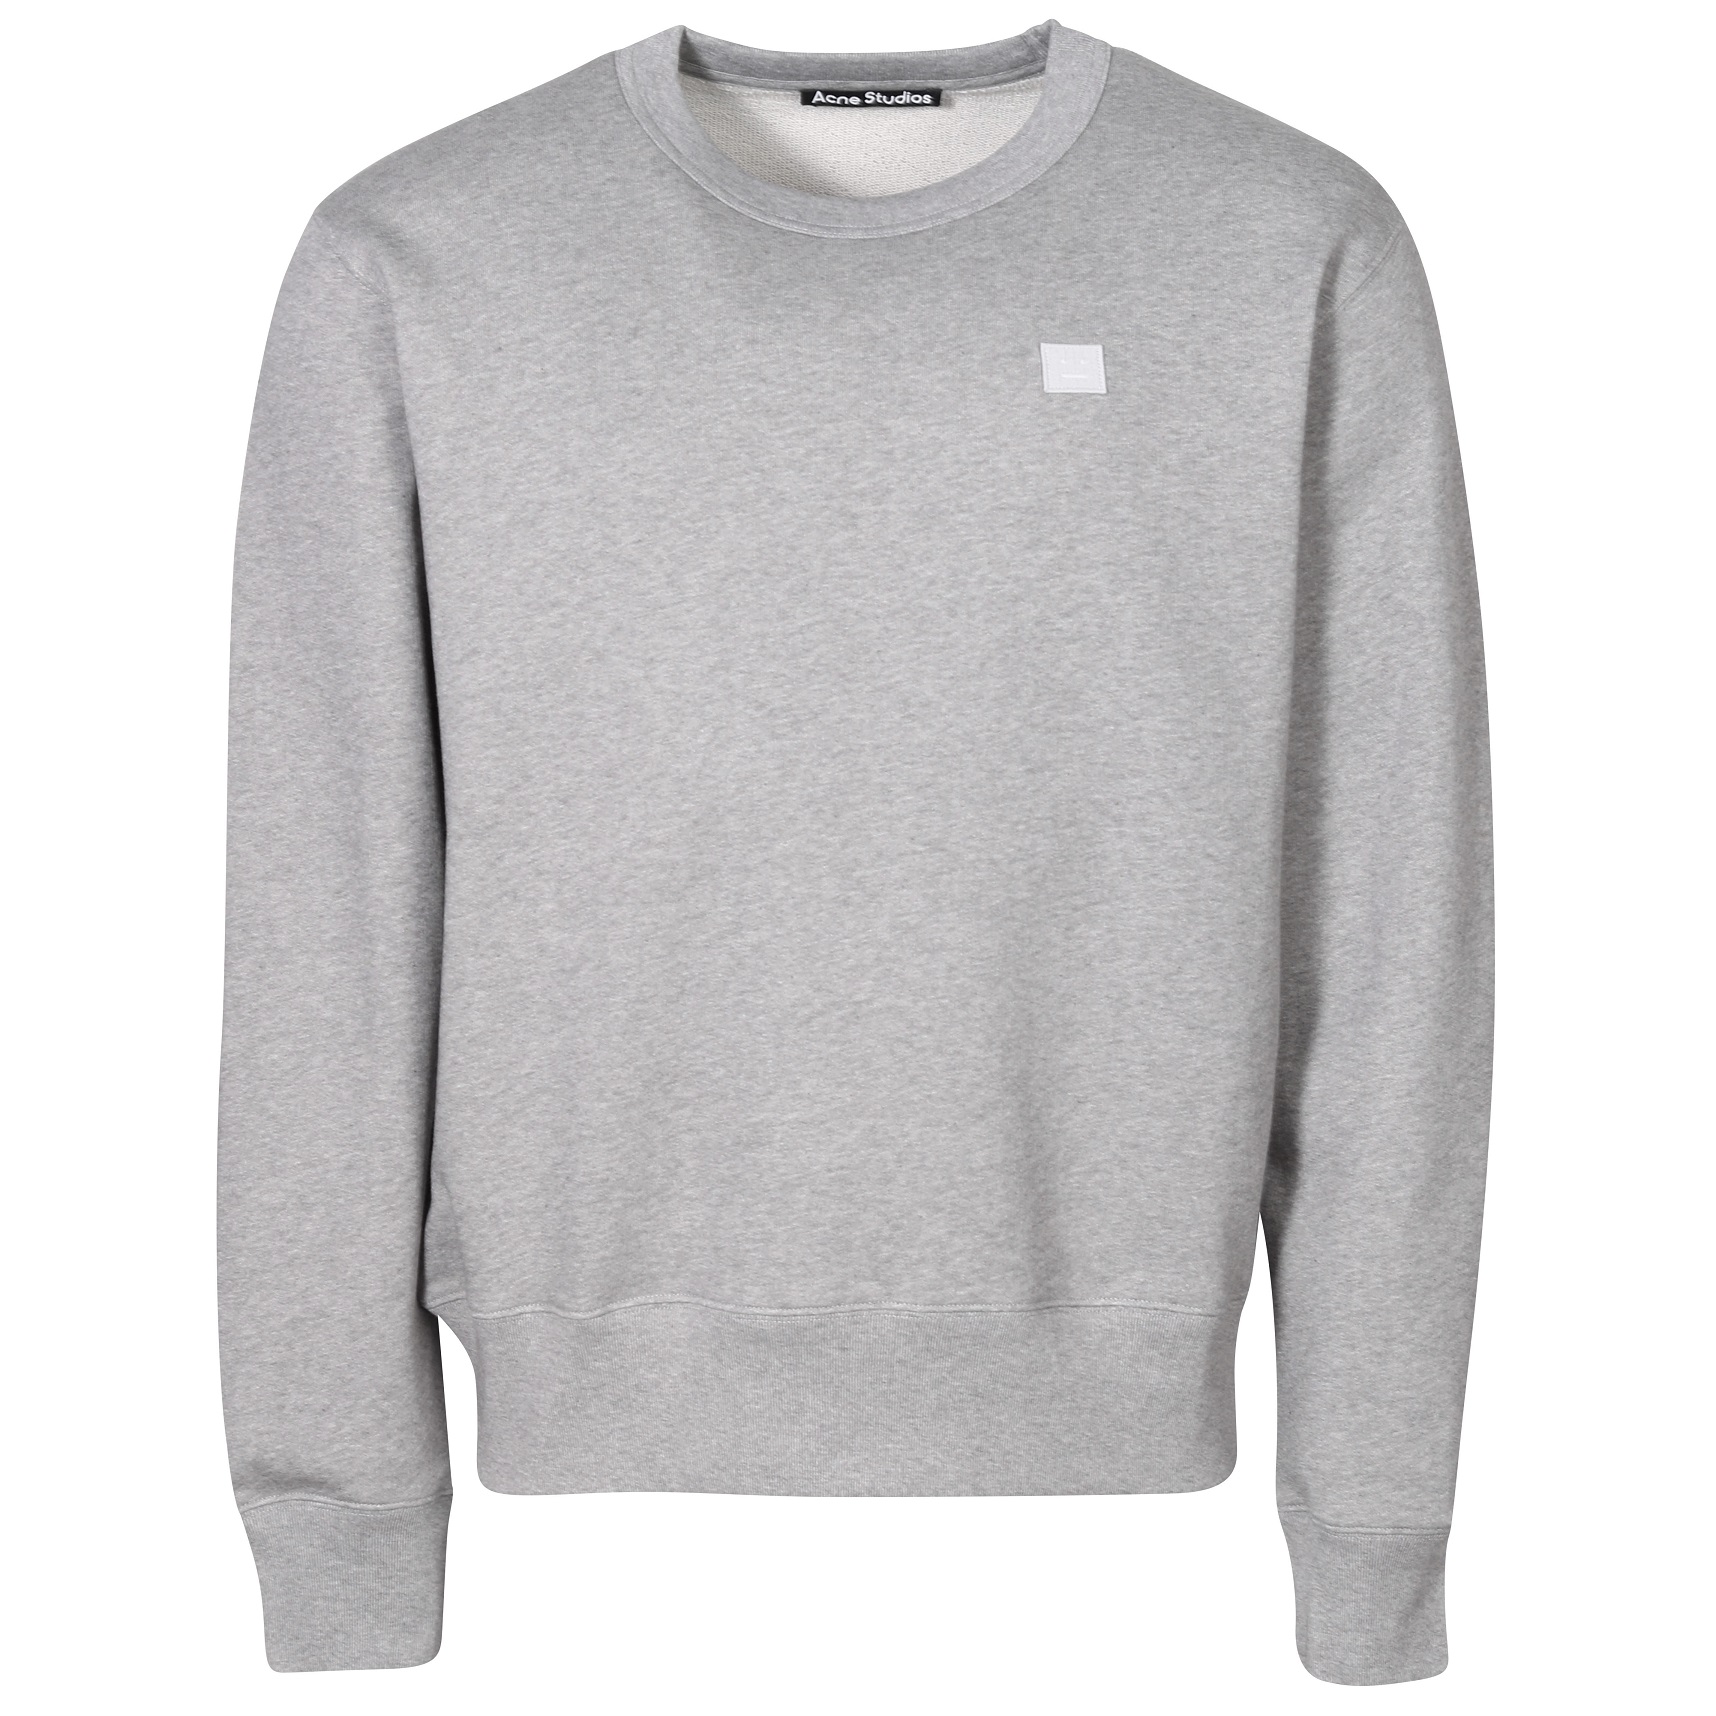 ACNE STUDIOS Unisex Regular Face Sweatshirt in Light Grey Melange S